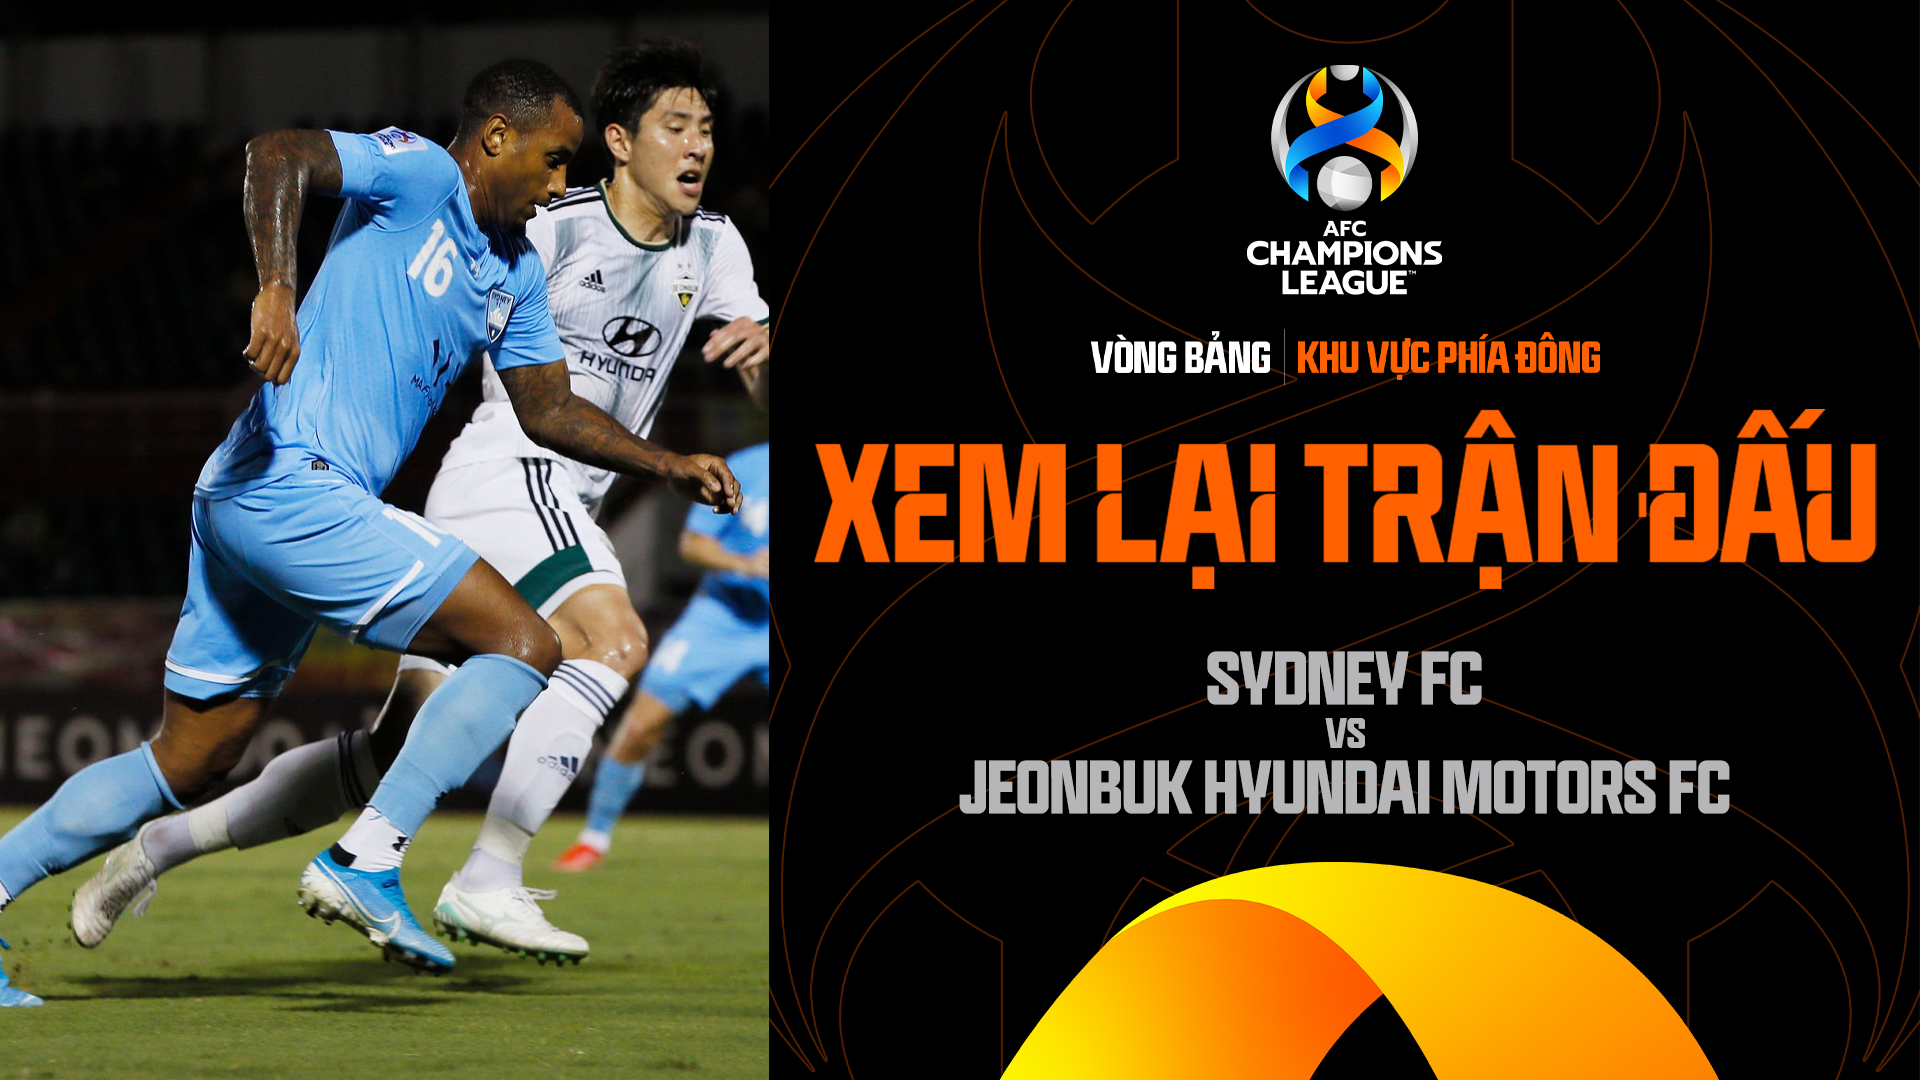 Sydney FC - Jeonbuk Hyundai Motors FC | Xem lại trận đấu - AFC Champions League